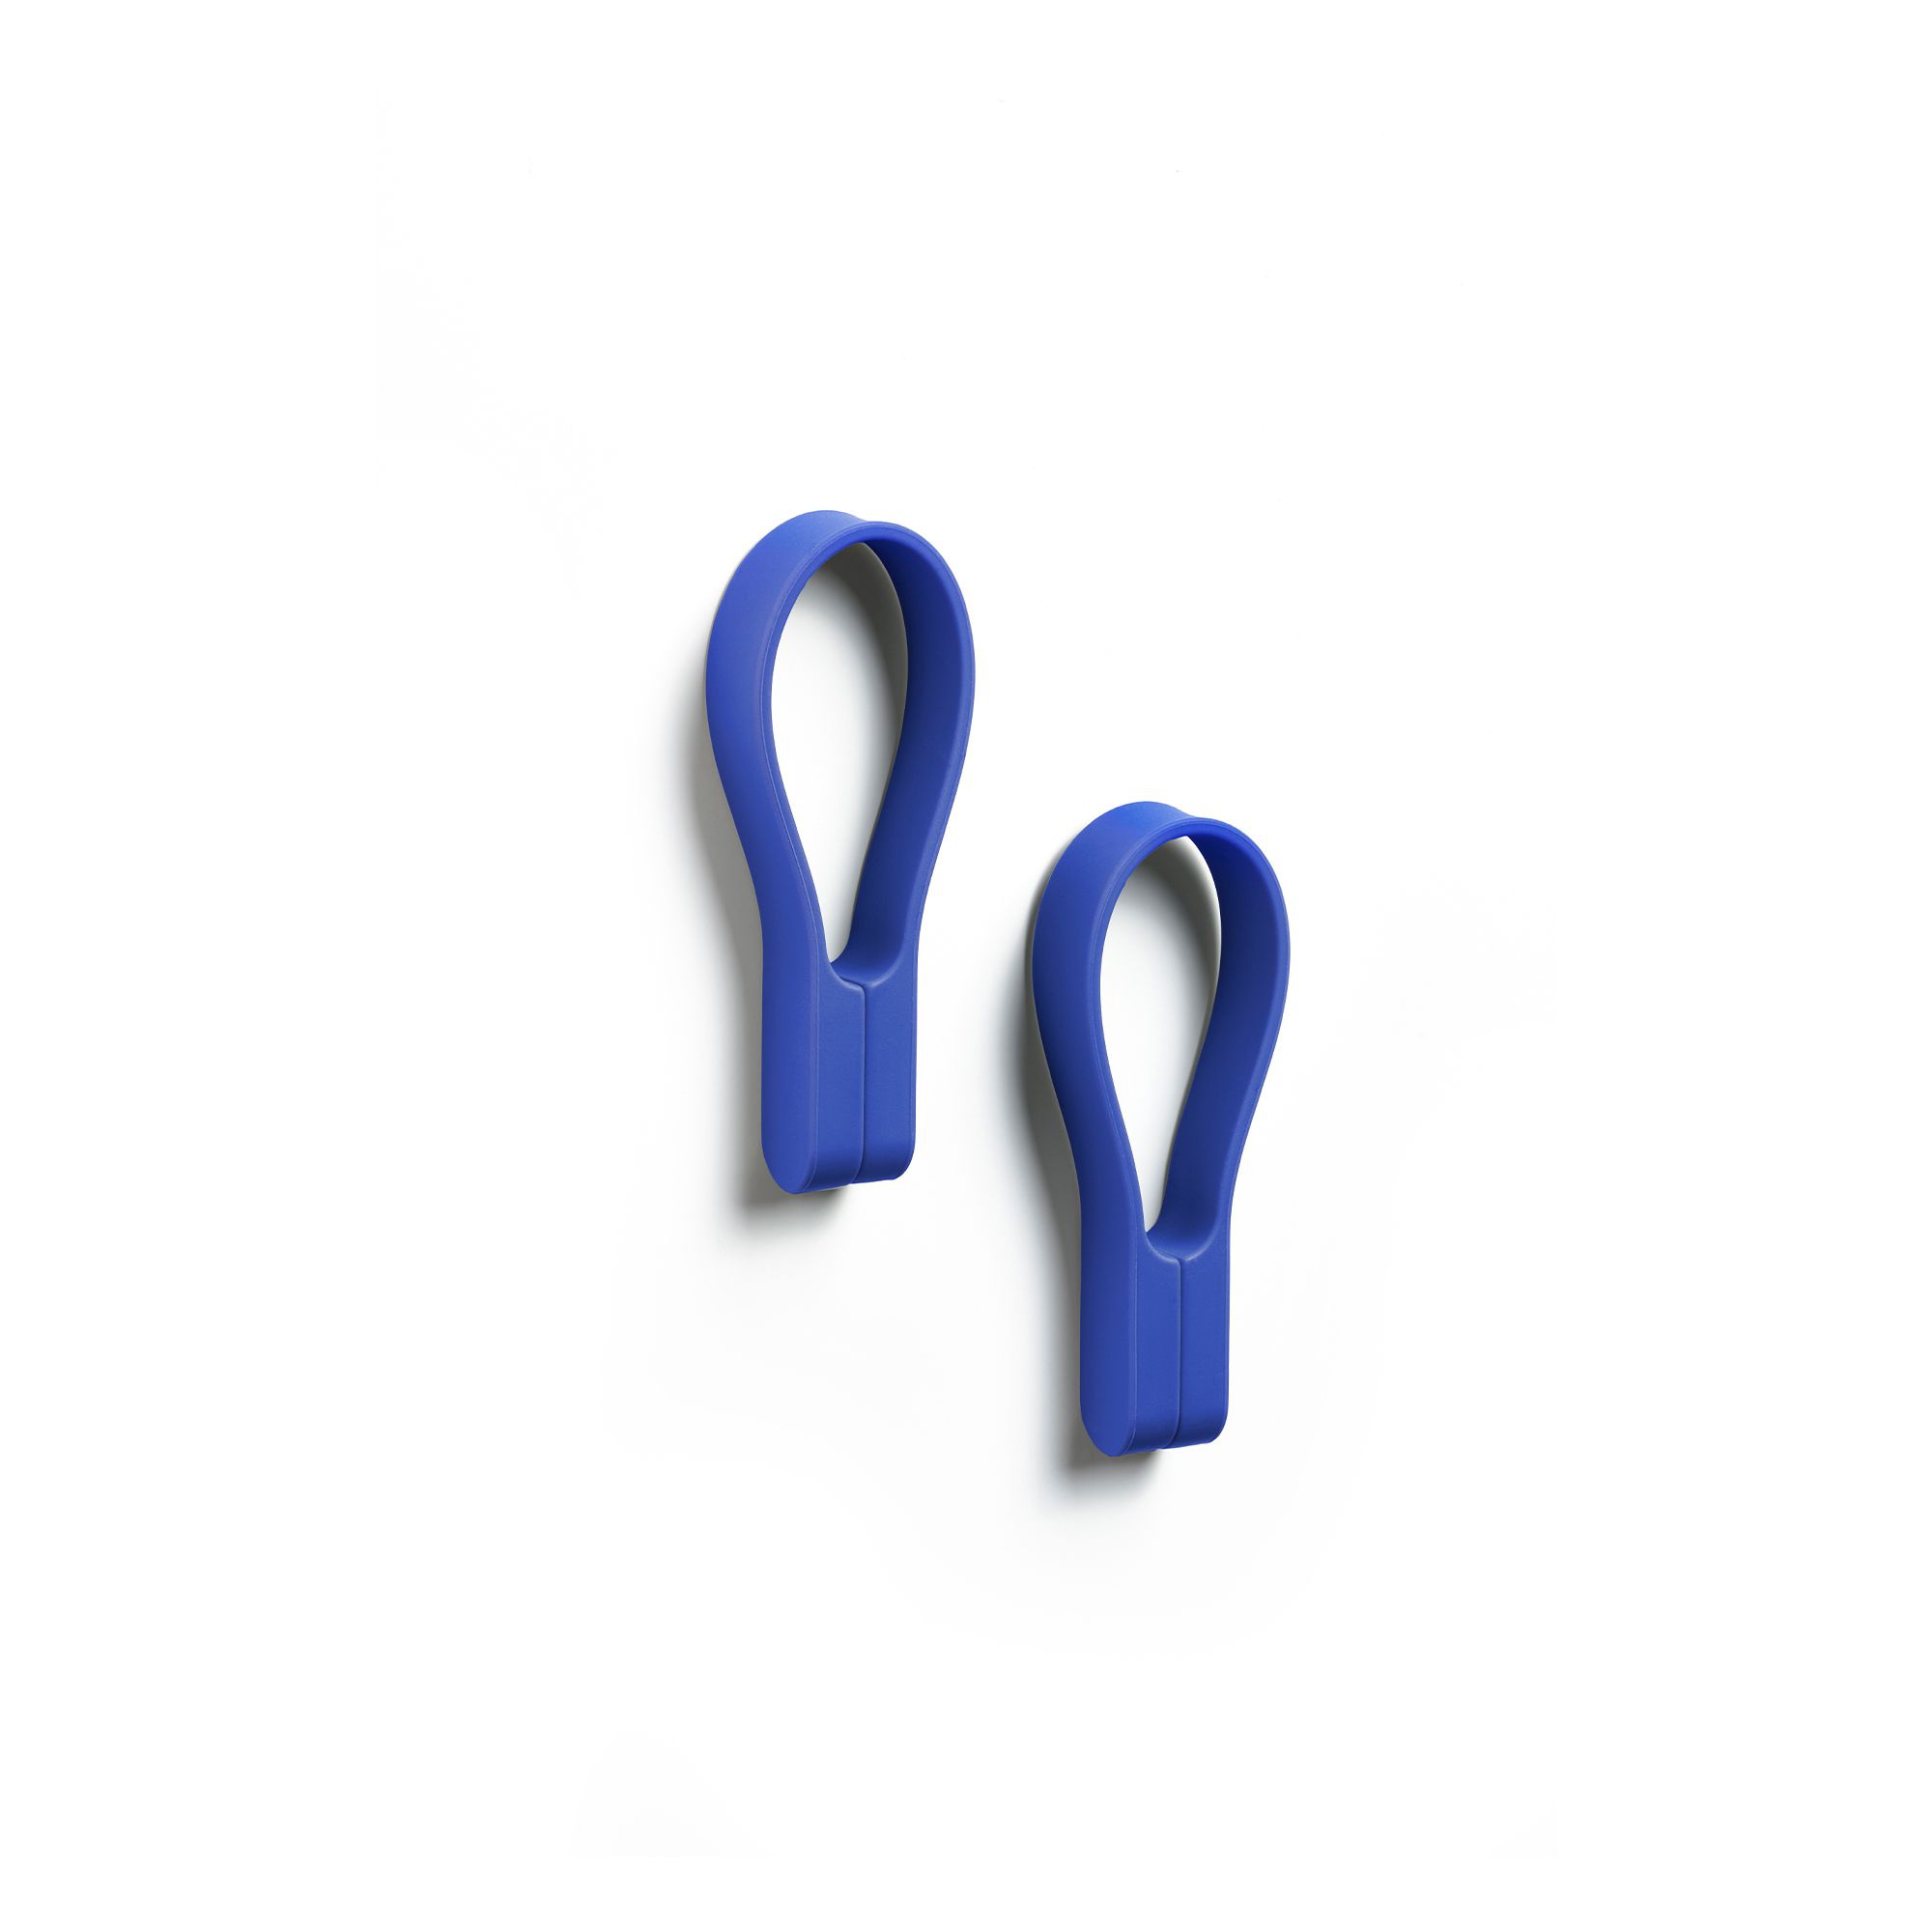 Zone - Loop magnet towel holder 2 pcs. - Indigo Blue